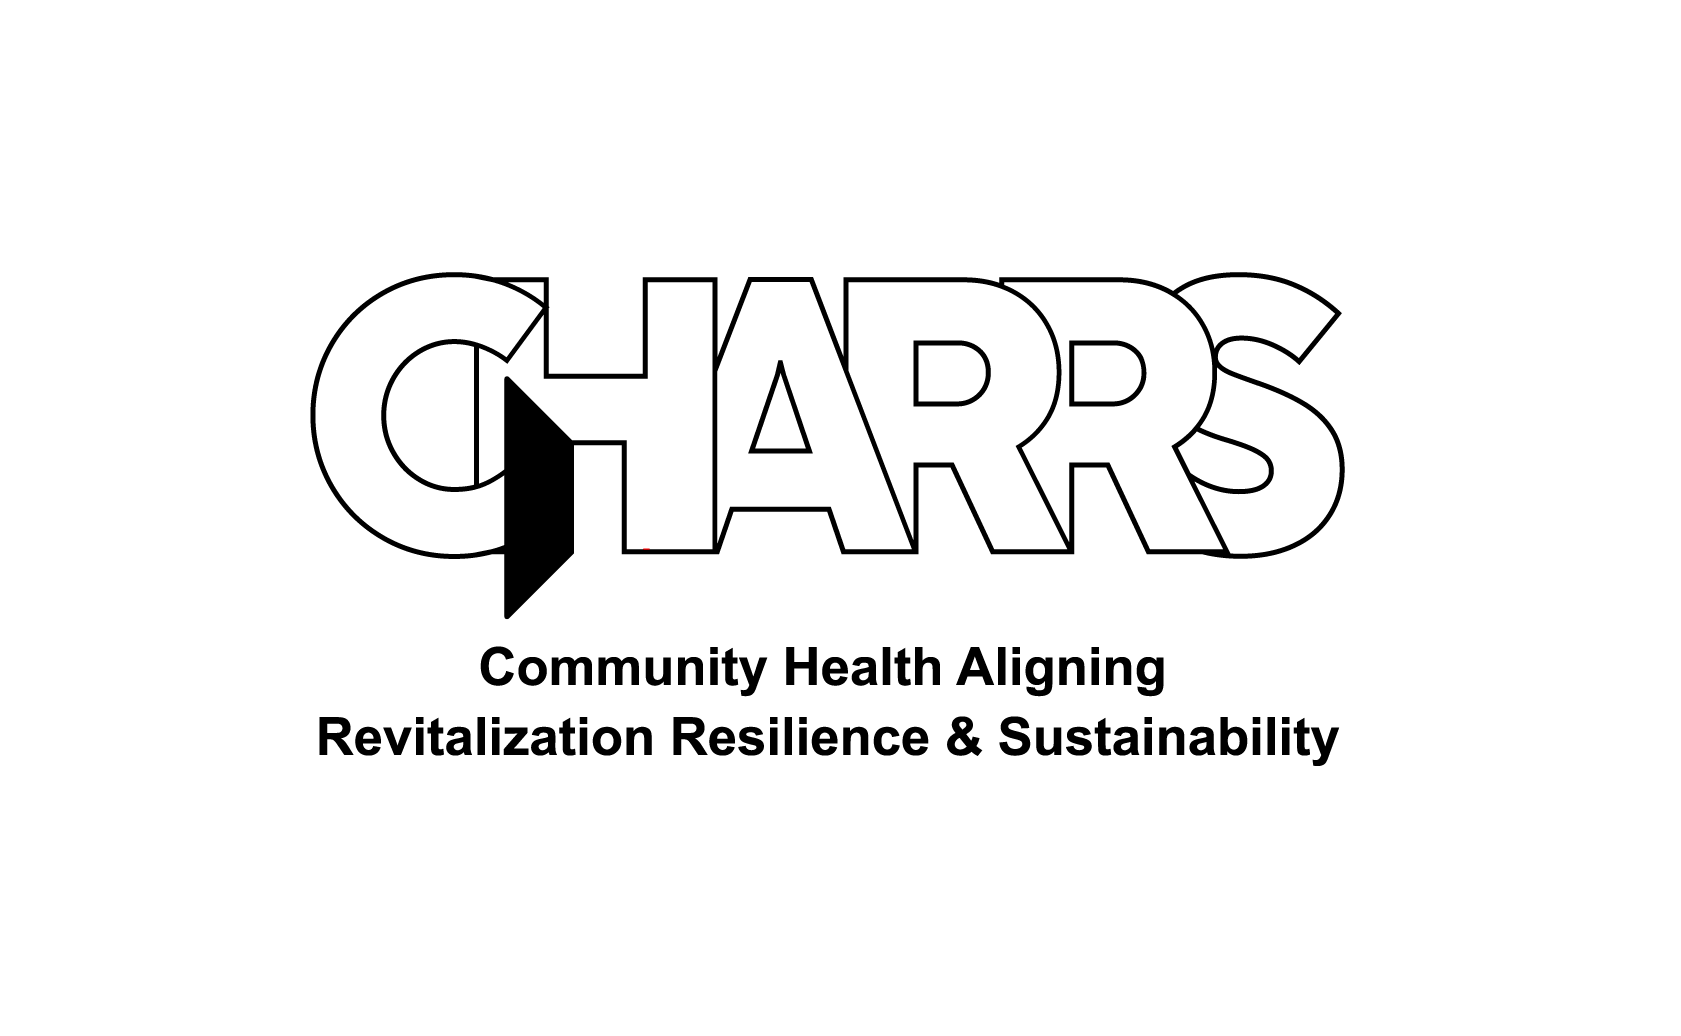 charrs logo